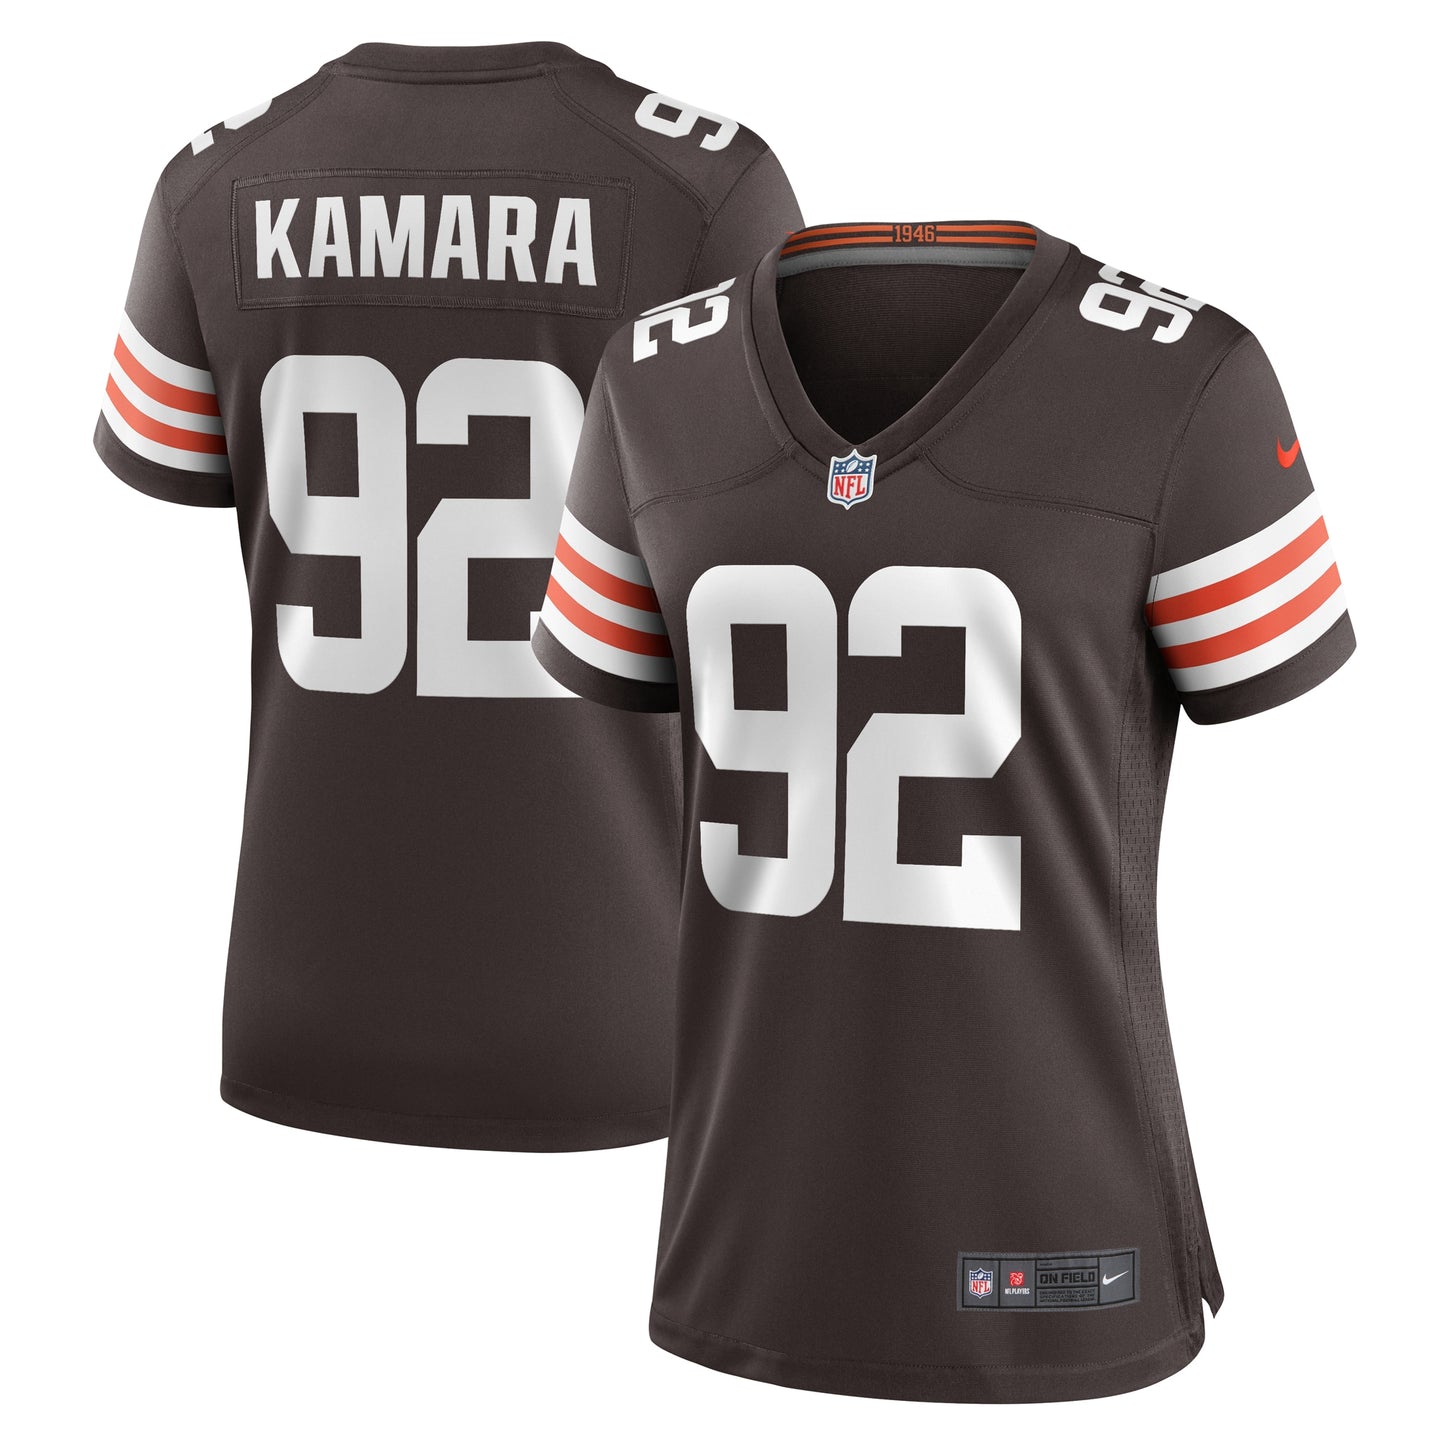 Sam Kamara Cleveland Browns Nike Women's Team Game Jersey - Brown